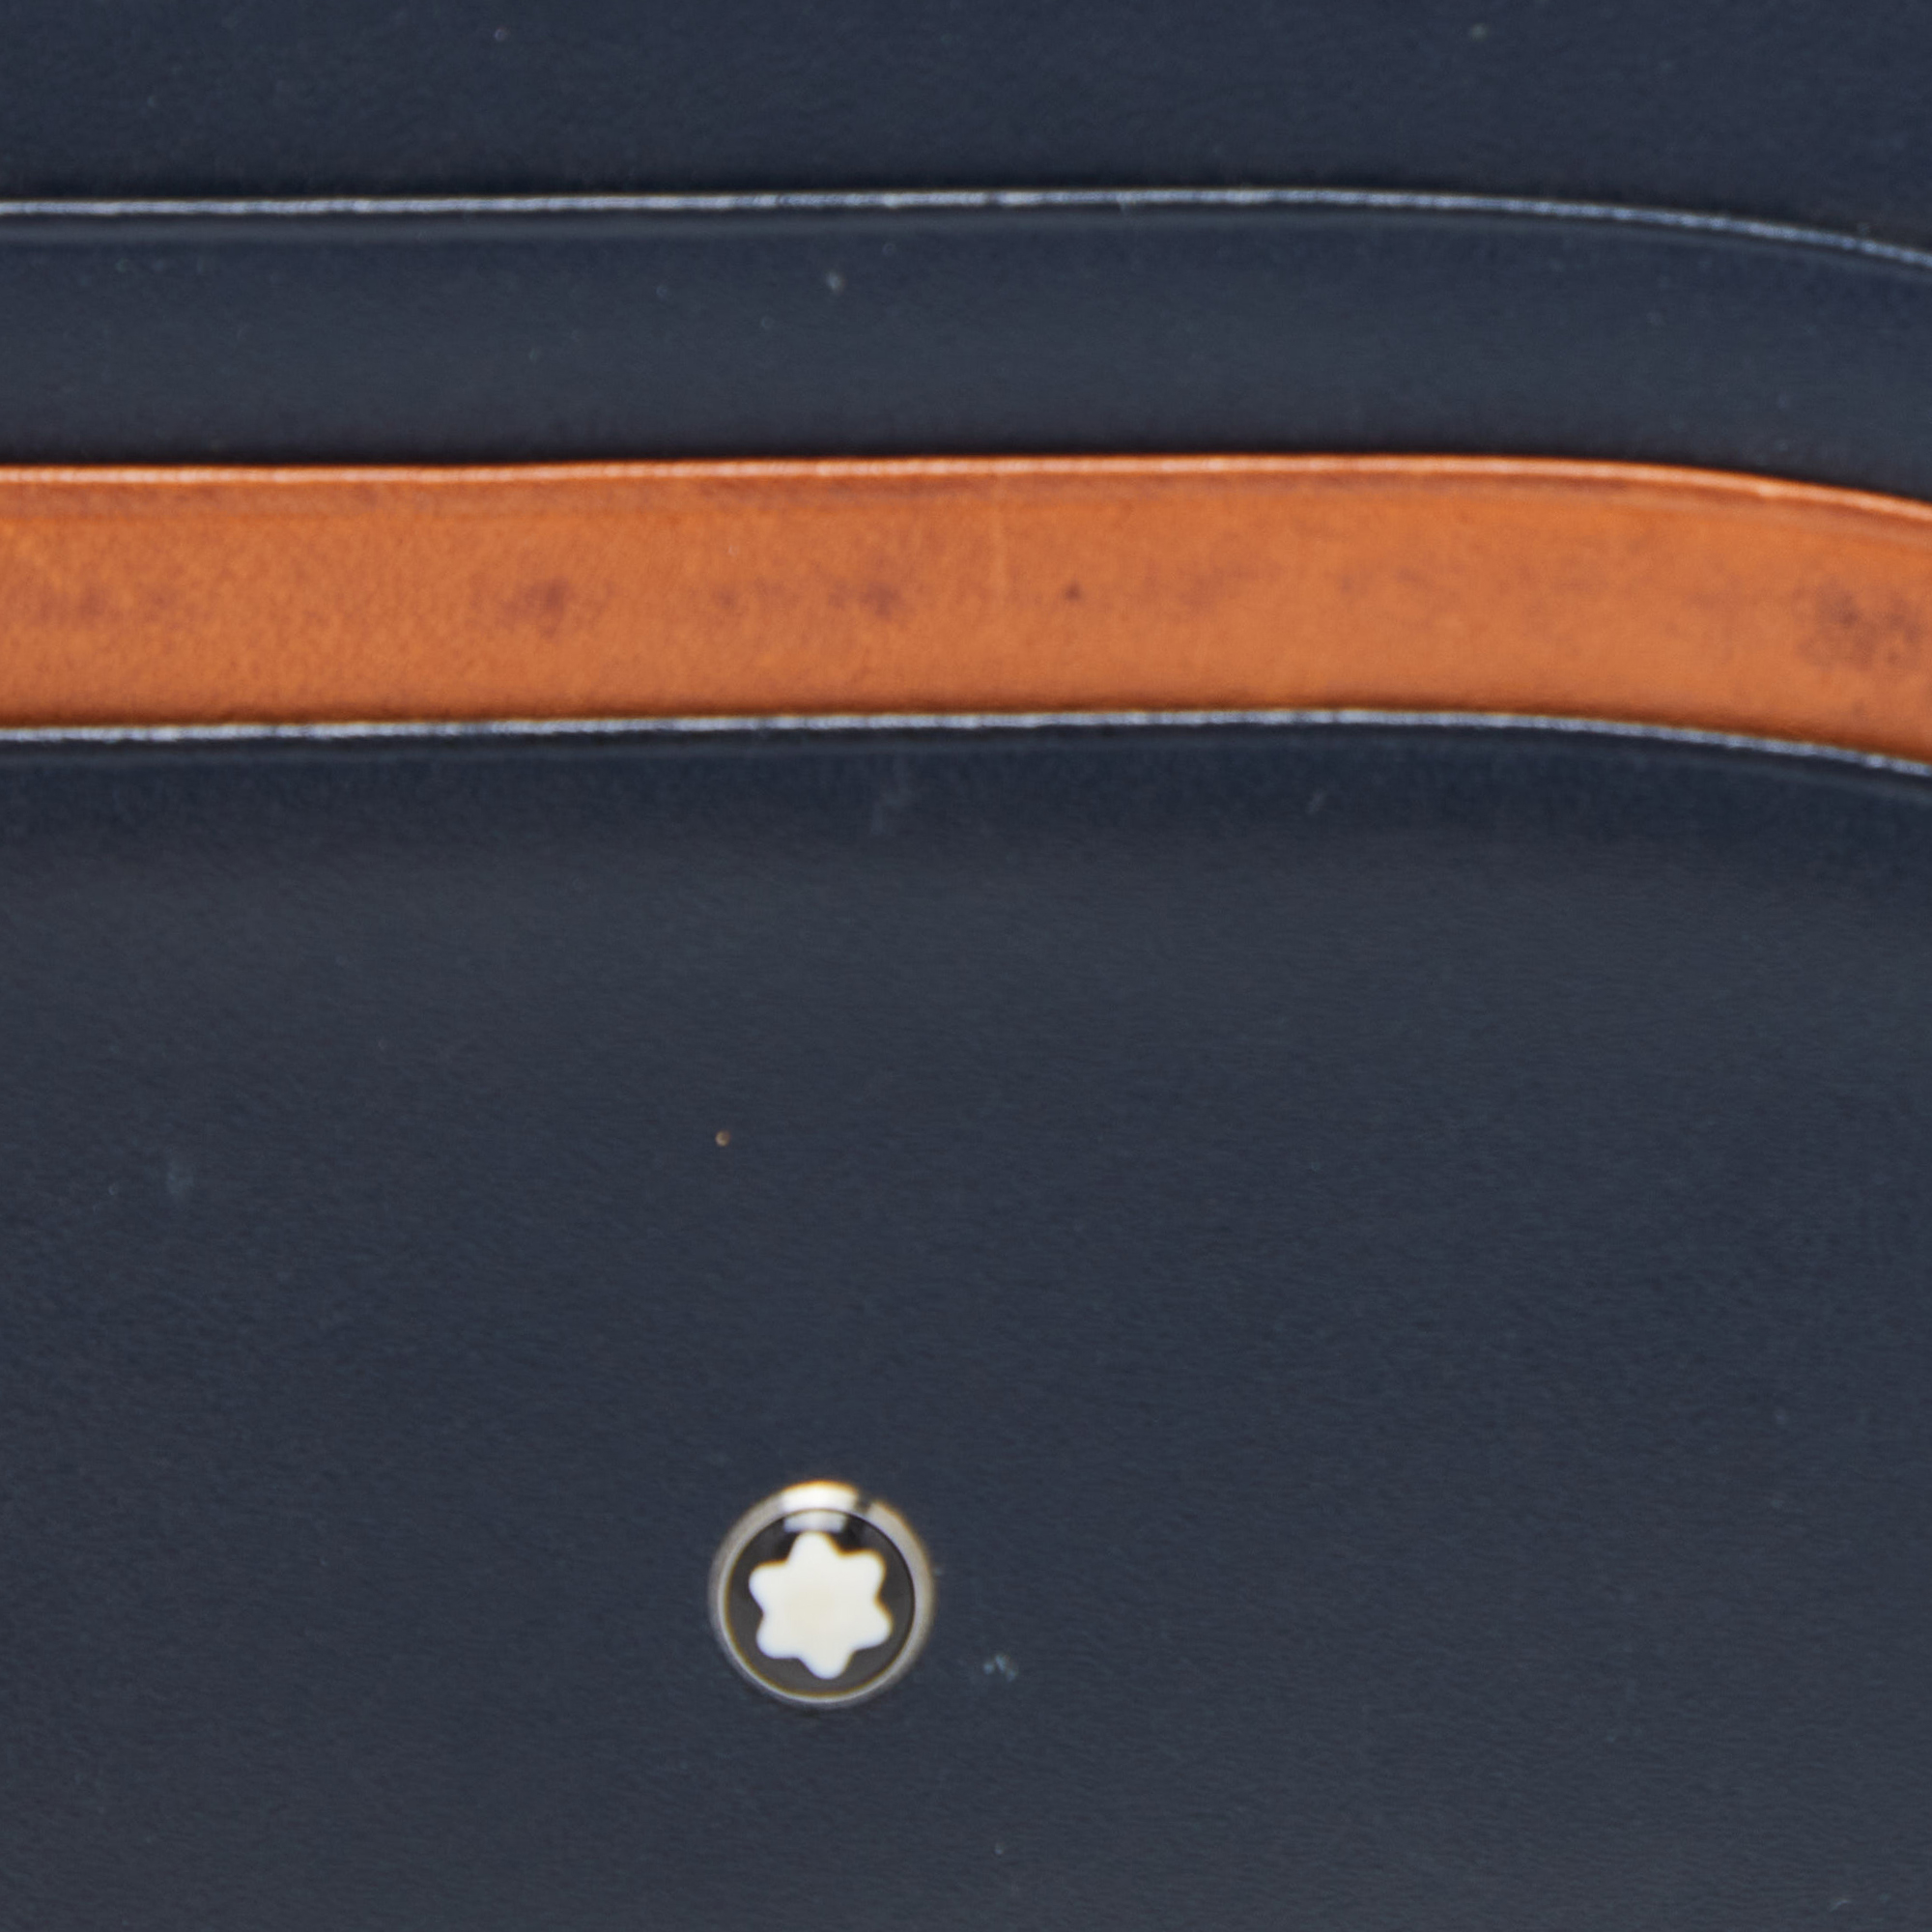 Montblanc Blue/Tan Leather Meisterstuck Card Holder 6CC